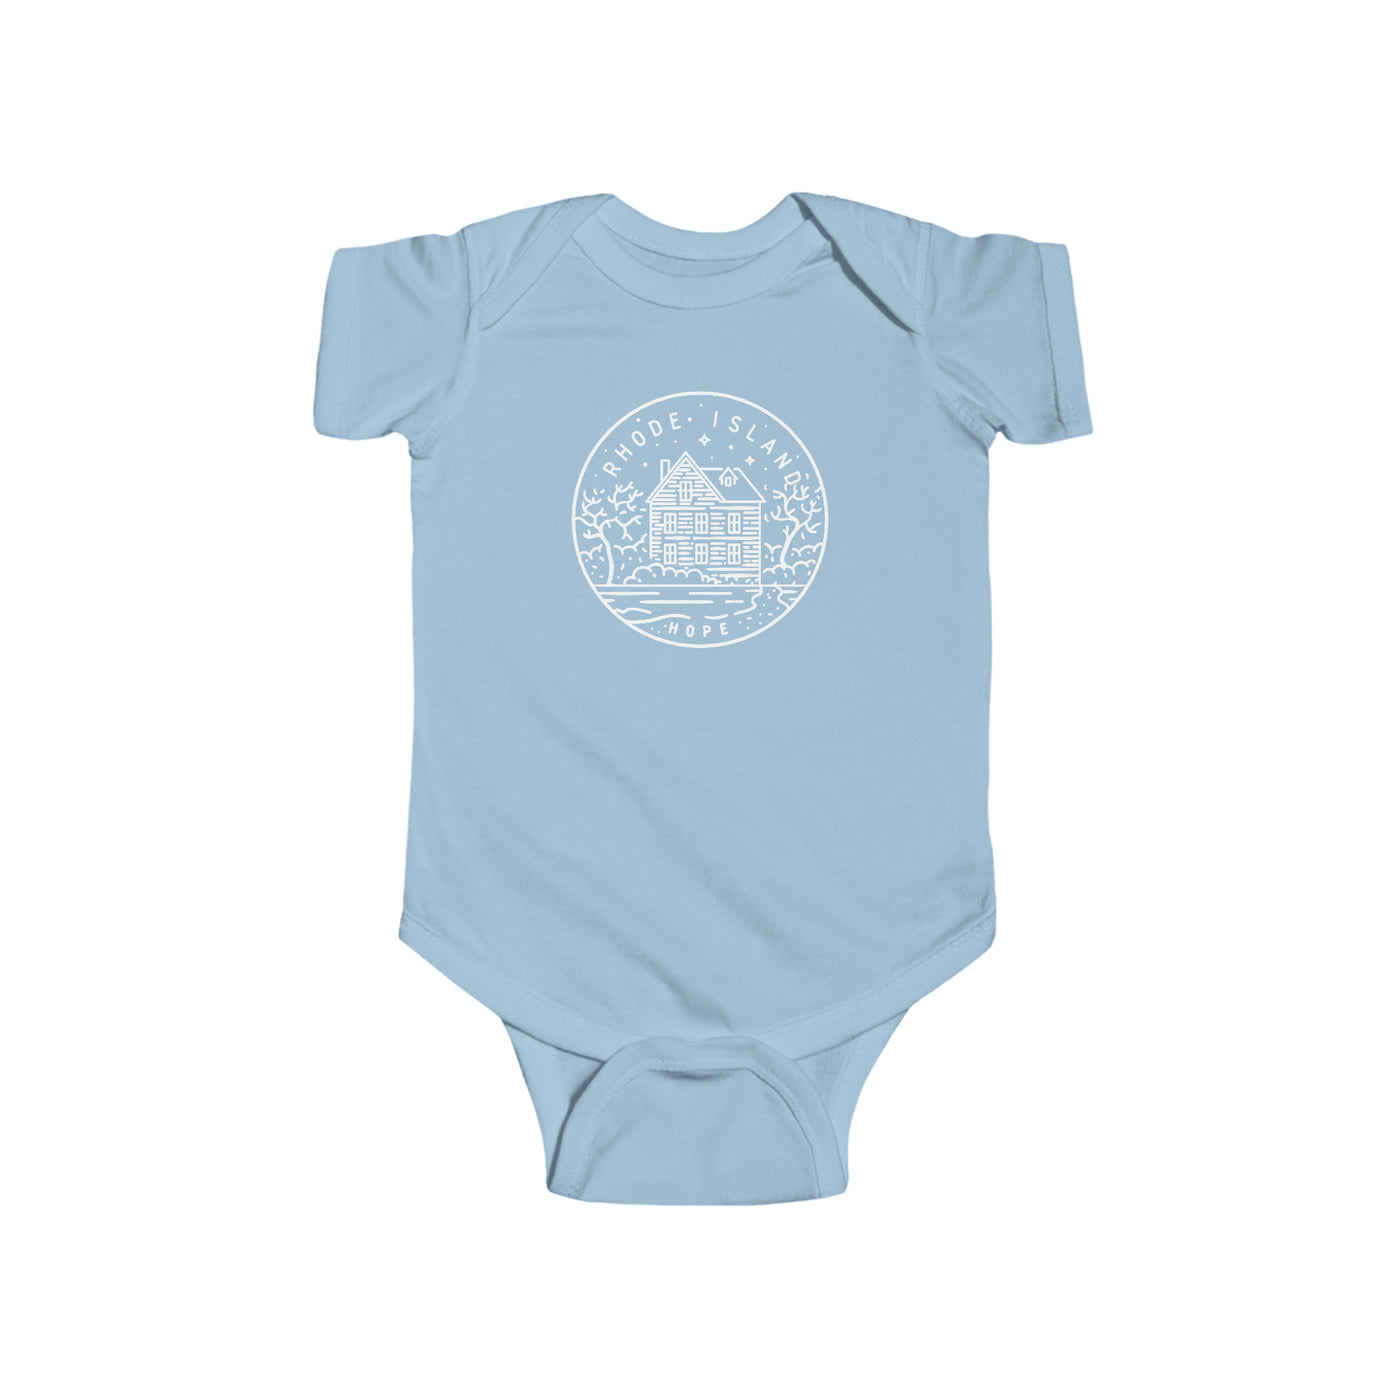 Rhode Island State Motto Baby Bodysuit